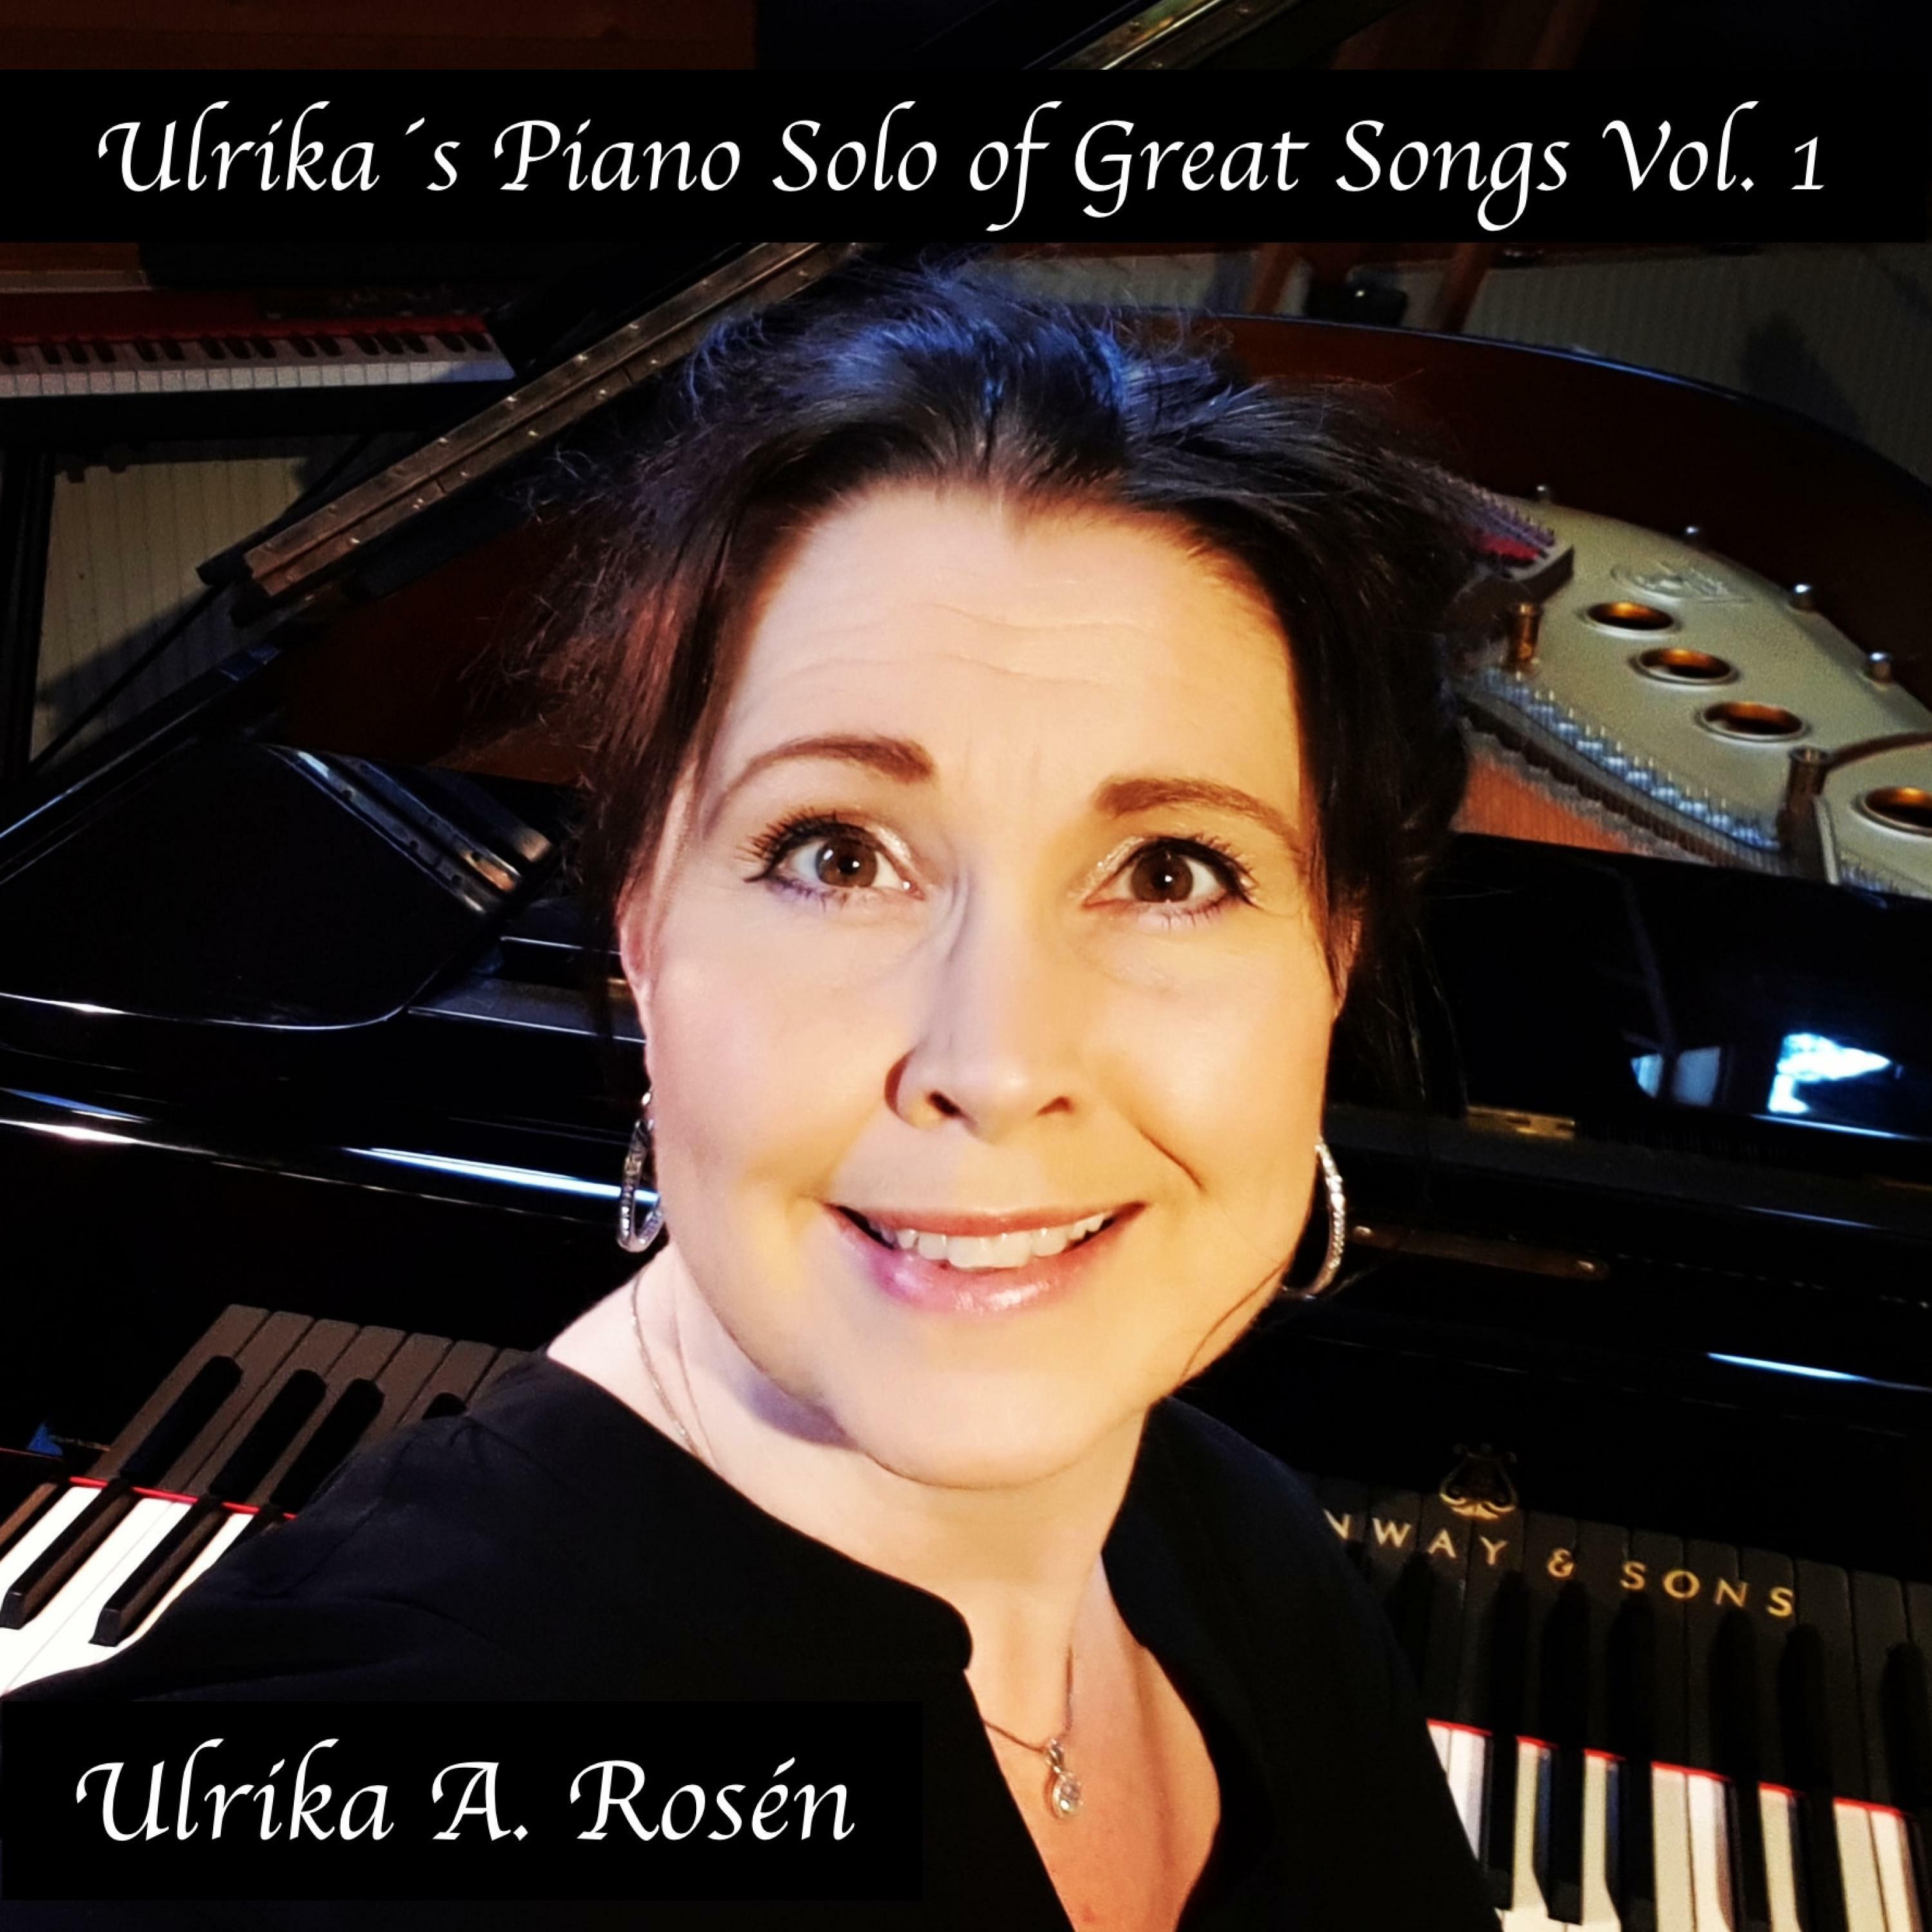 Ulrika A. Rosén - Ulrikas Piano Solo of Great Songs, Vol. 1 | iHeart